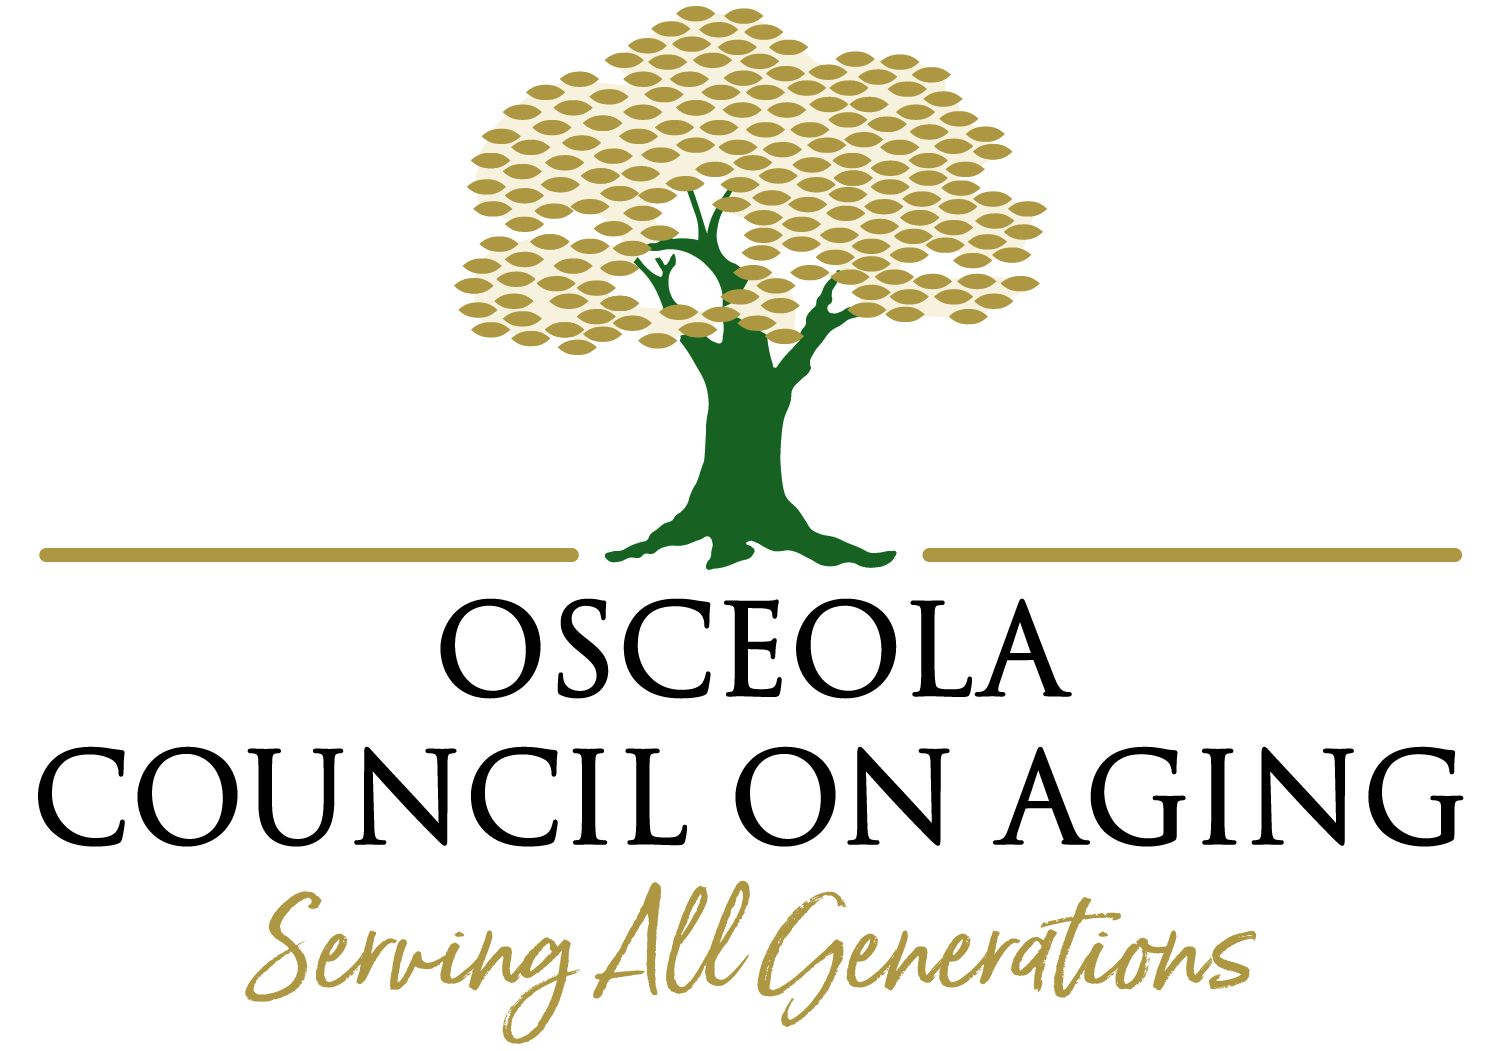 Osceola Council on Aging logo